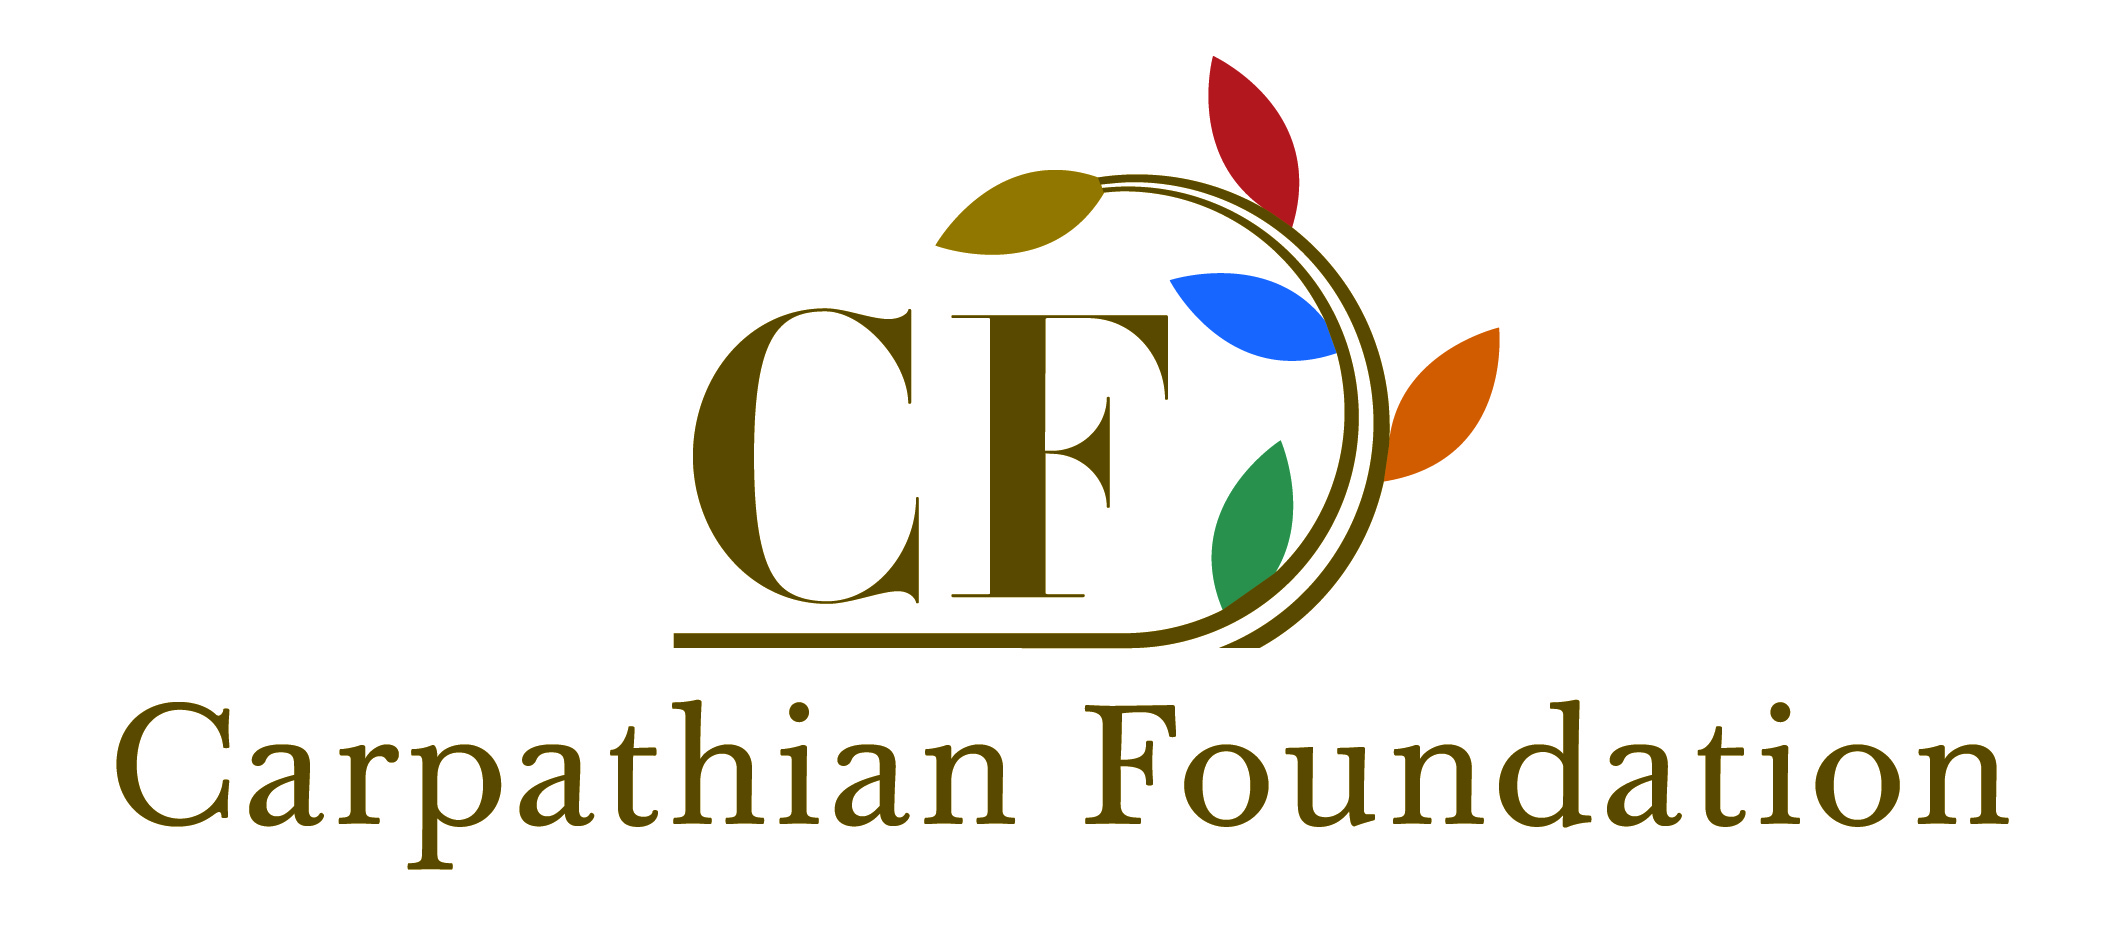 carpathian foundation logo